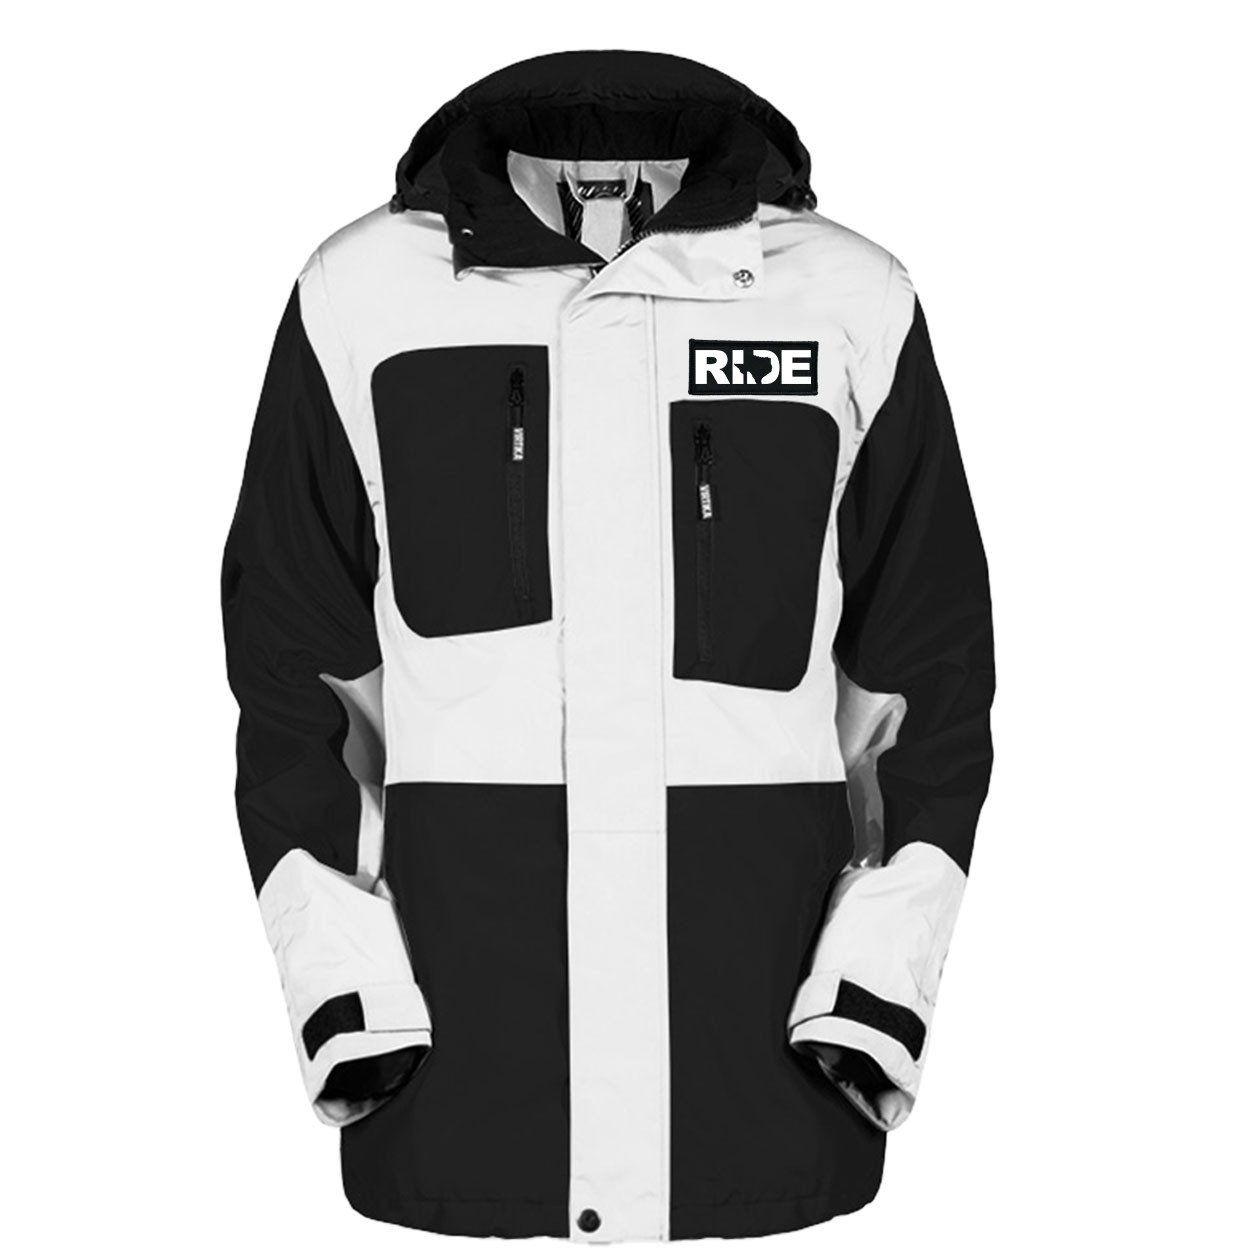 Ride Texas Pro Waterproof Breathable Winter Virtika Jacket Black/White (White Logo)